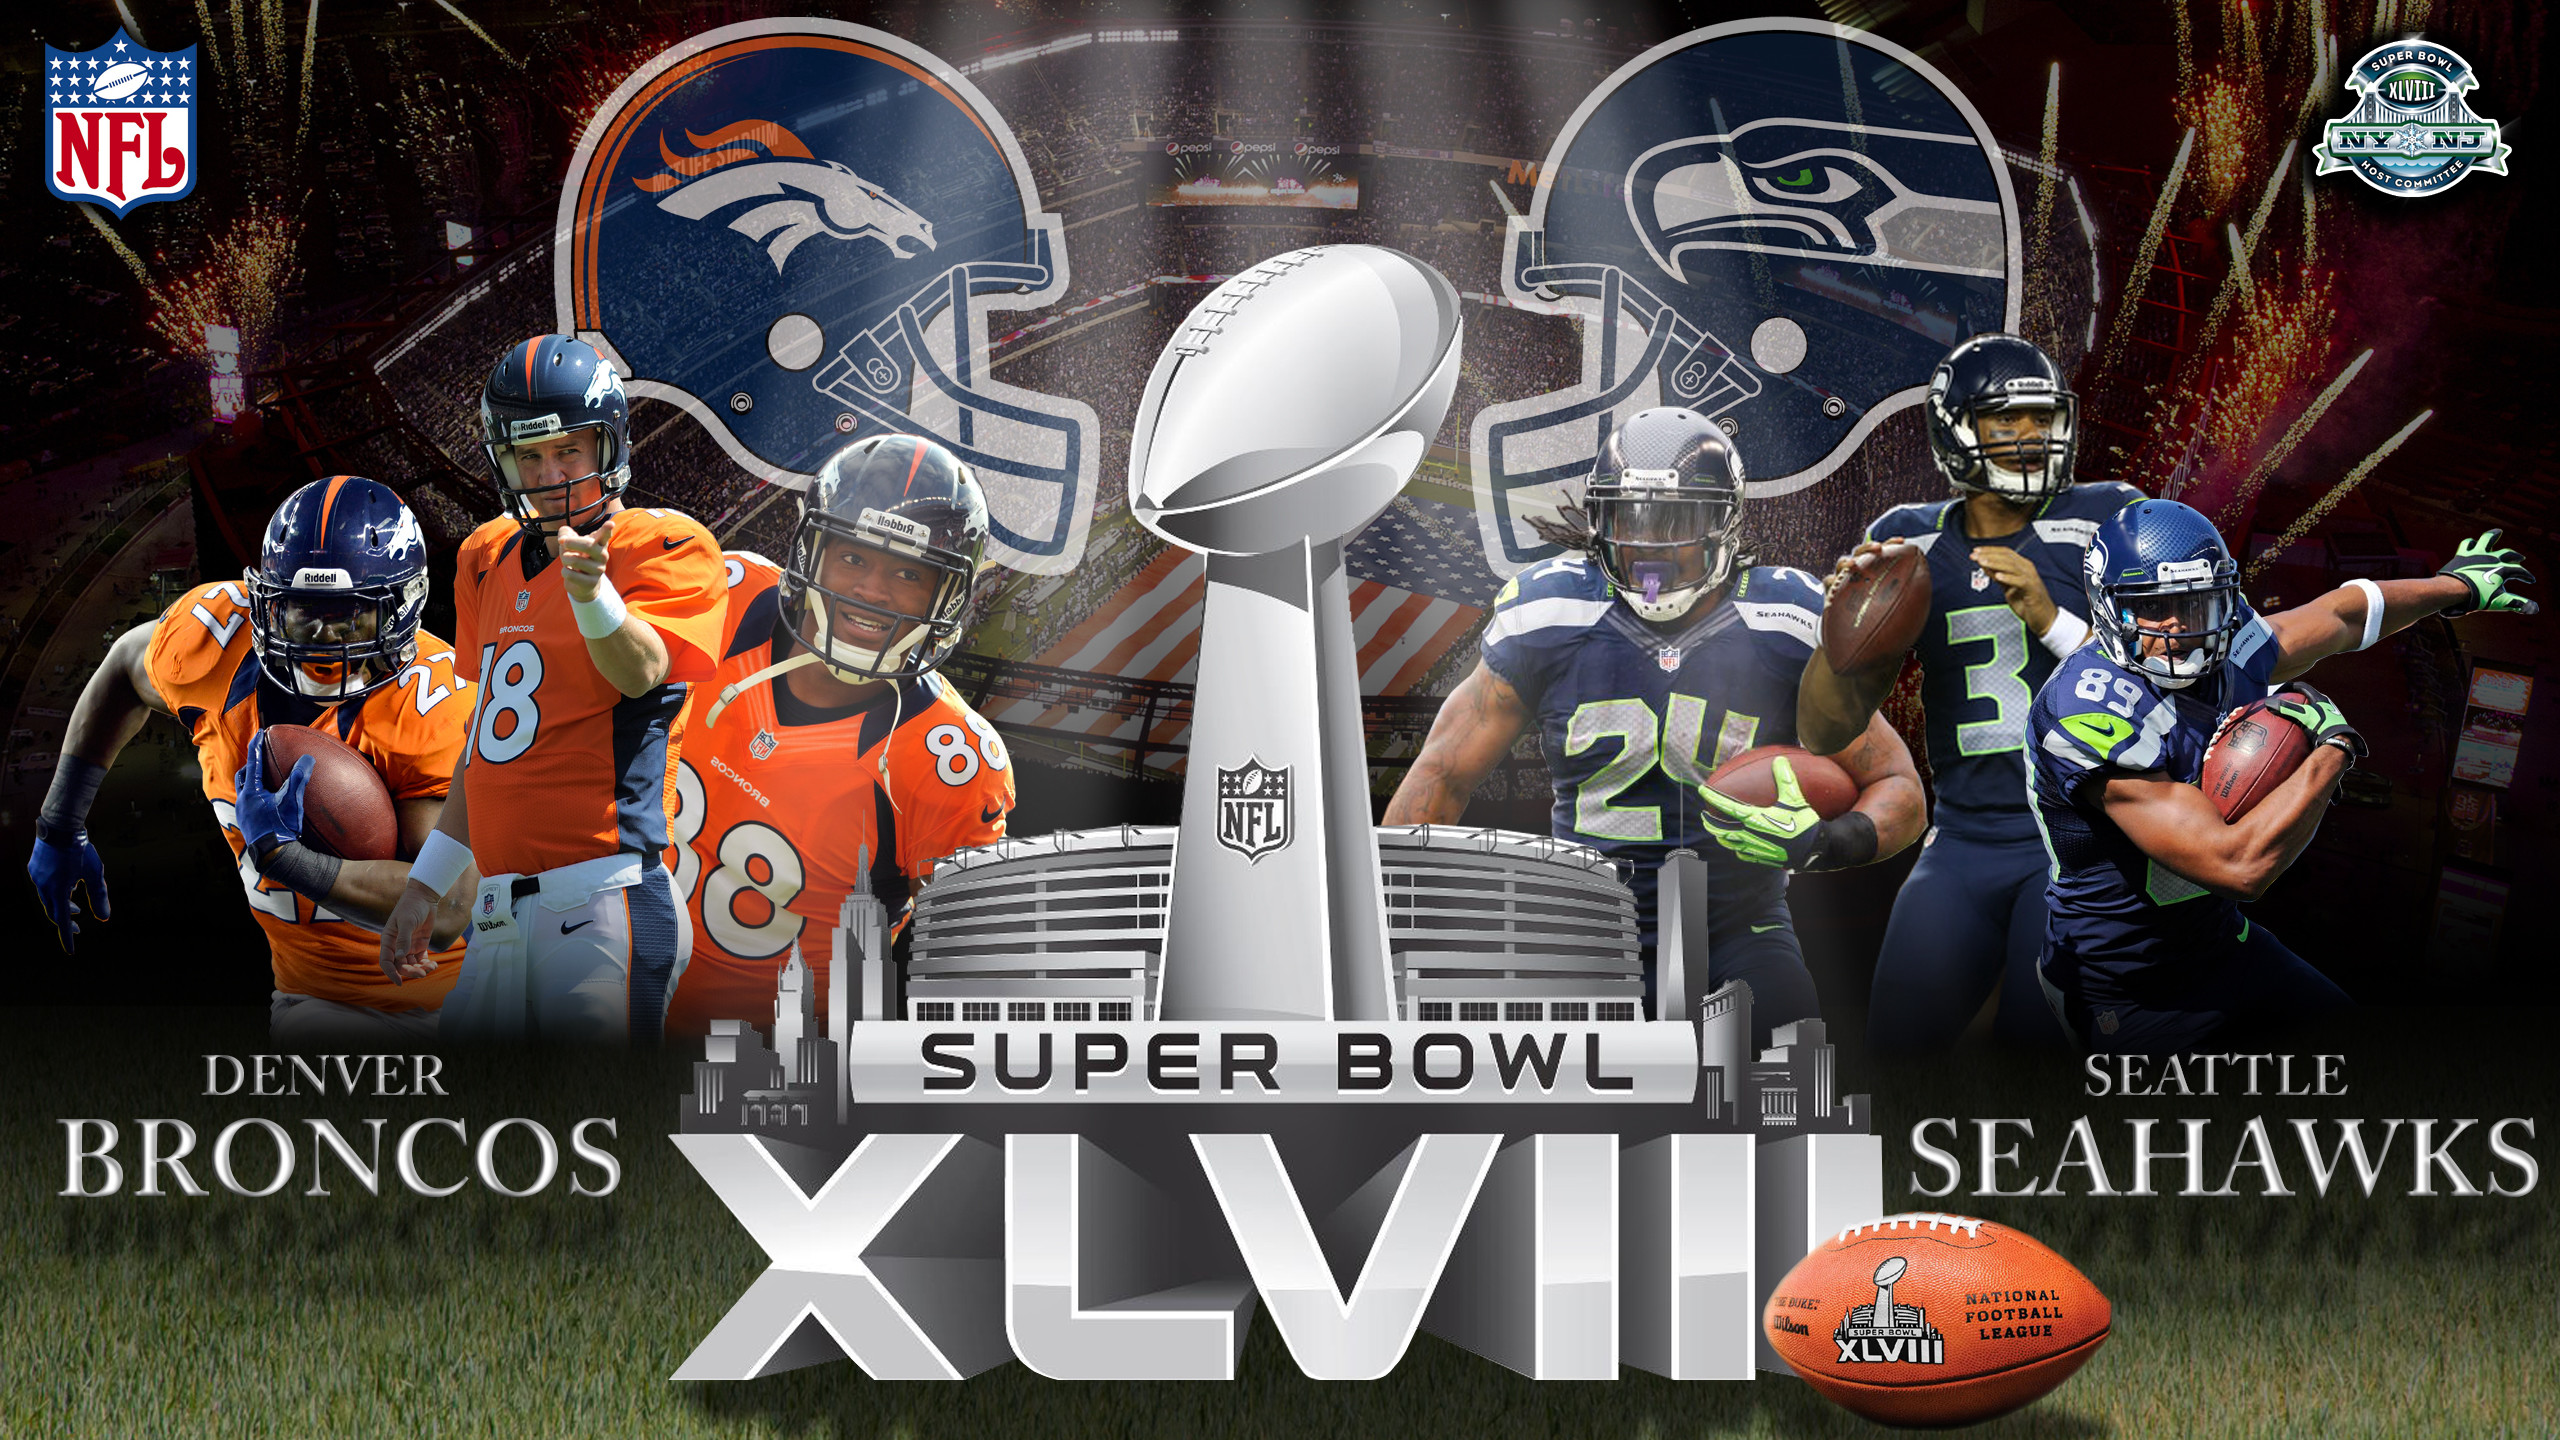 2560x1440 Super Bowl XLVIII Broncos Vs Seahawks by BeAware8 